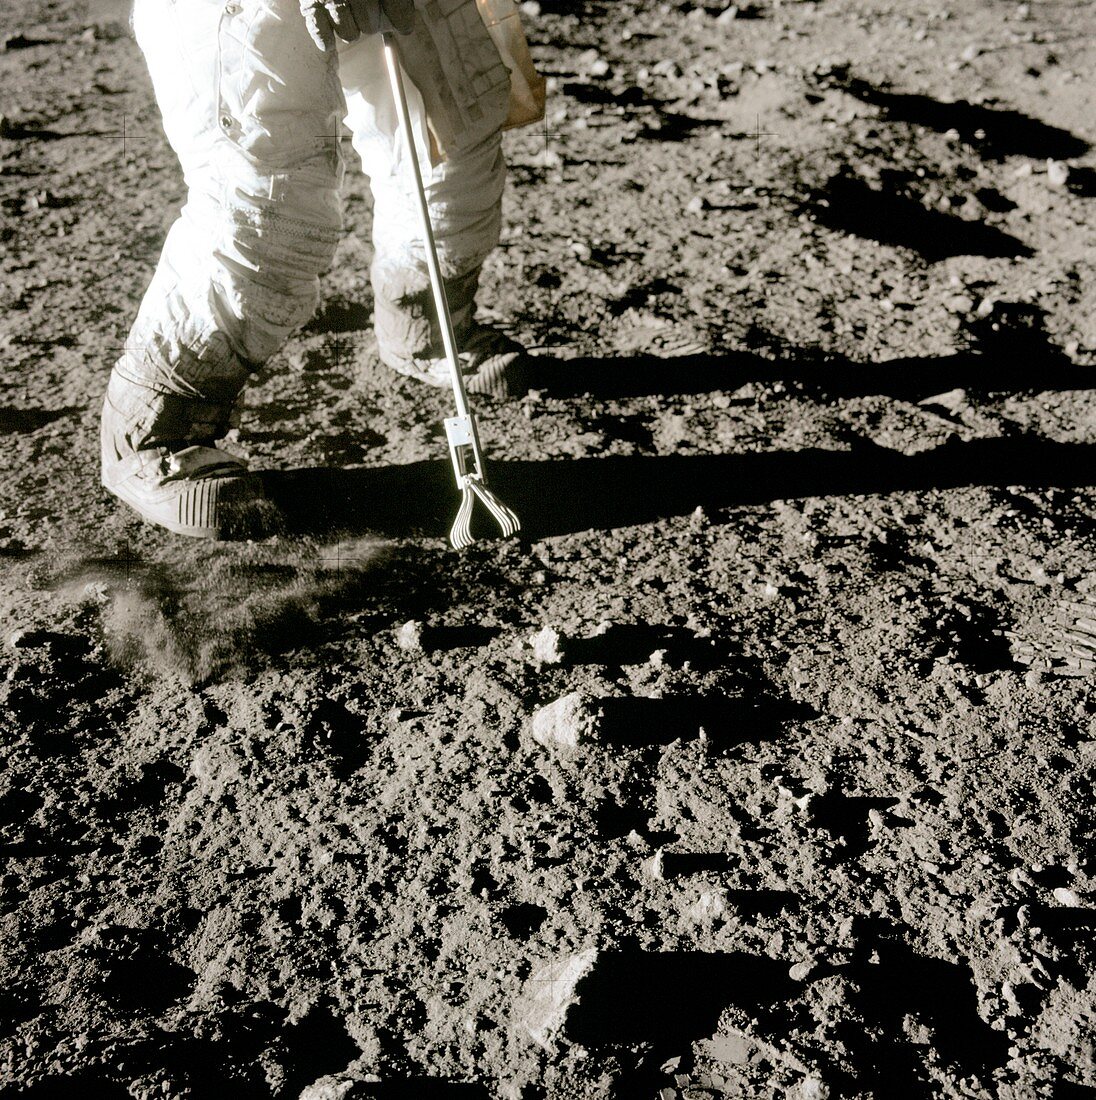 Apollo 12 astronaut using lunar hand tool, 1969